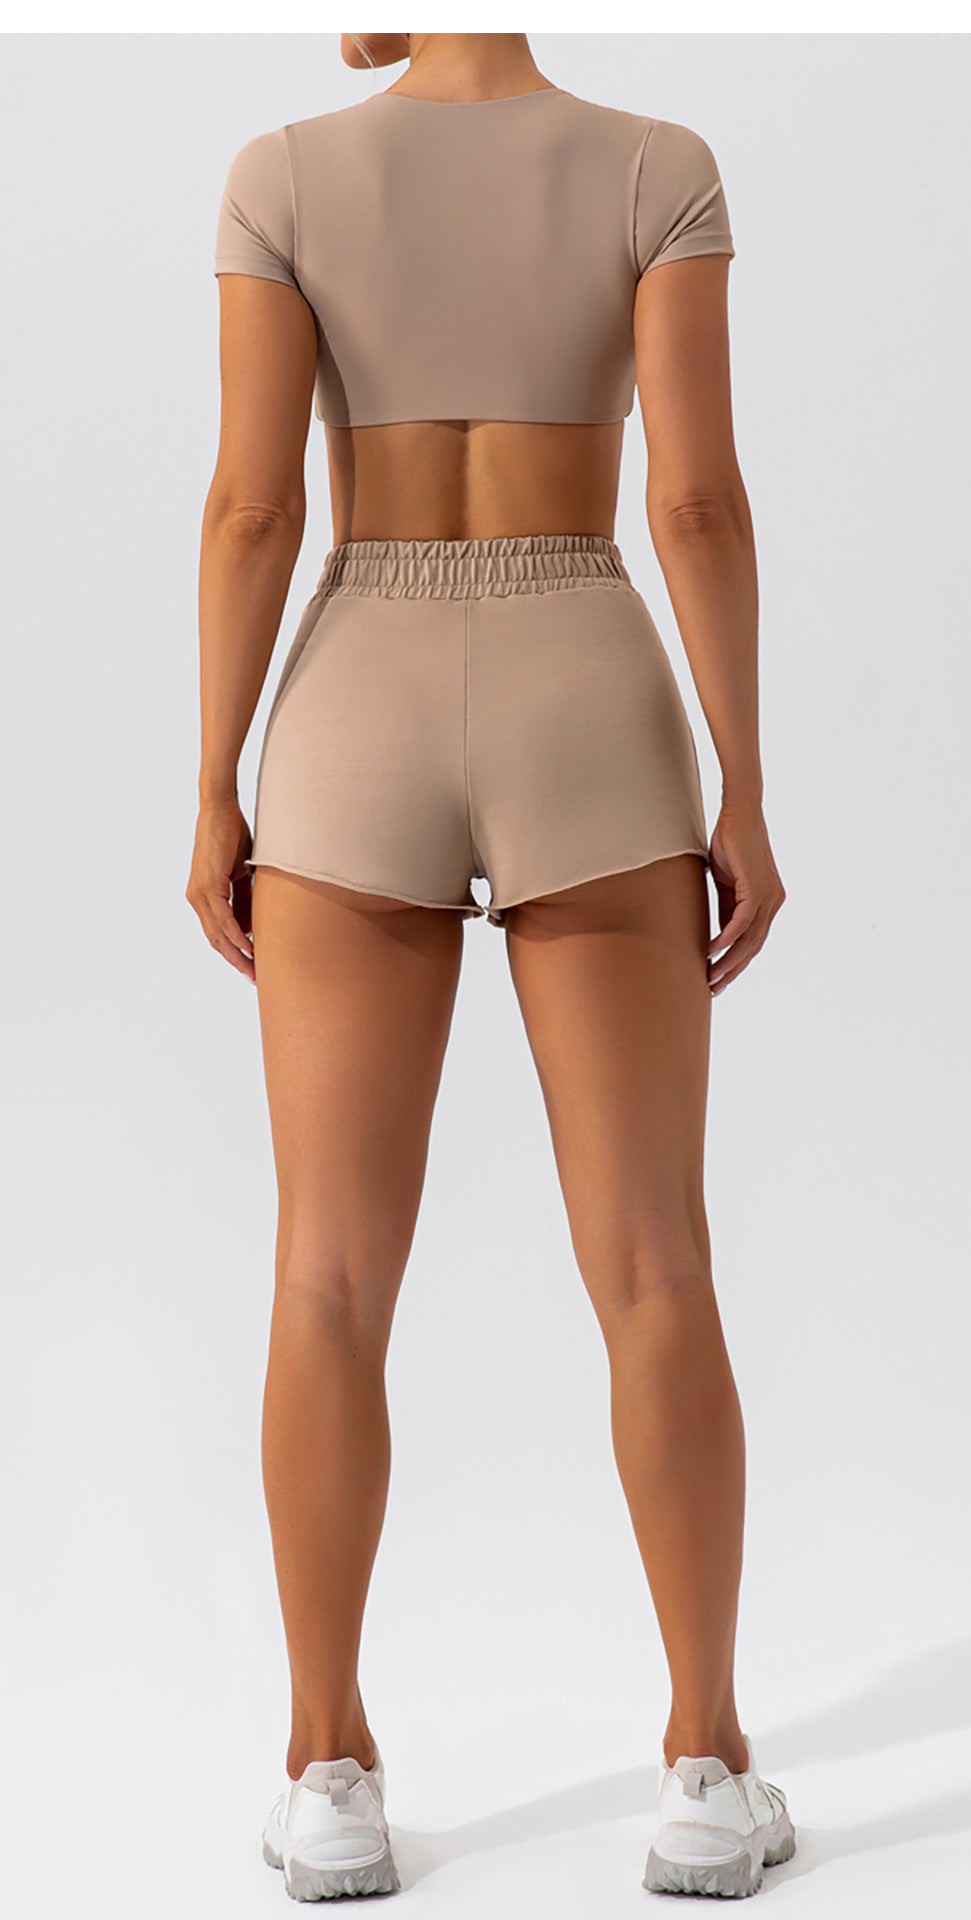 yoga clothing short-sleeved women's navel running sports top women's quick-drying naked fitness short-sleeved T-shirt